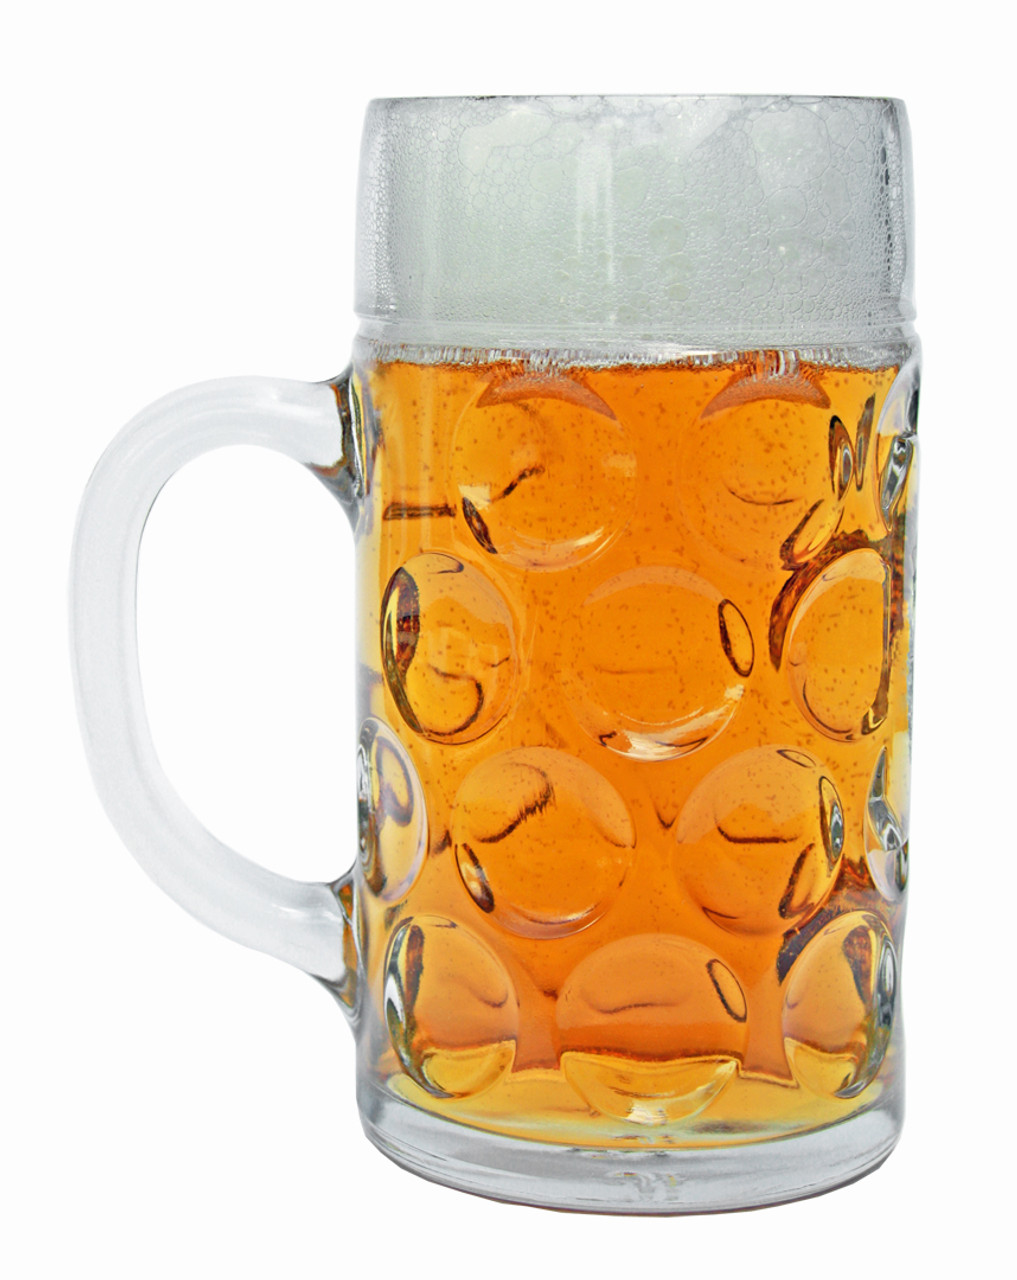 Deutschland Crest Map Dimpled Oktoberfest Glass Beer Mug 1 Liter